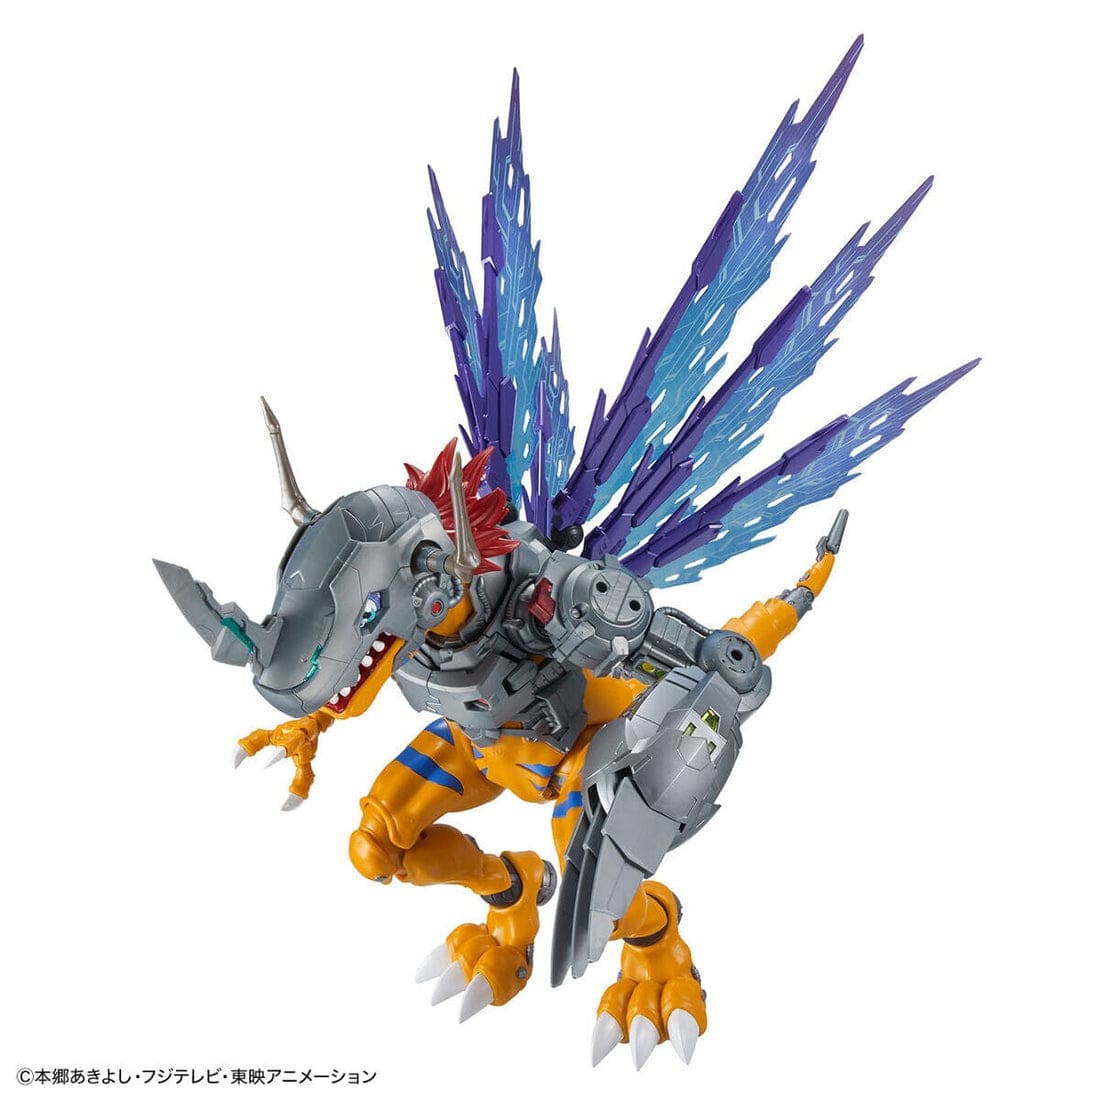 Bandai Scale Model Kits Digimon Adventure Figure-rise Standard Amplified MetalGreymon (Vaccine Species)